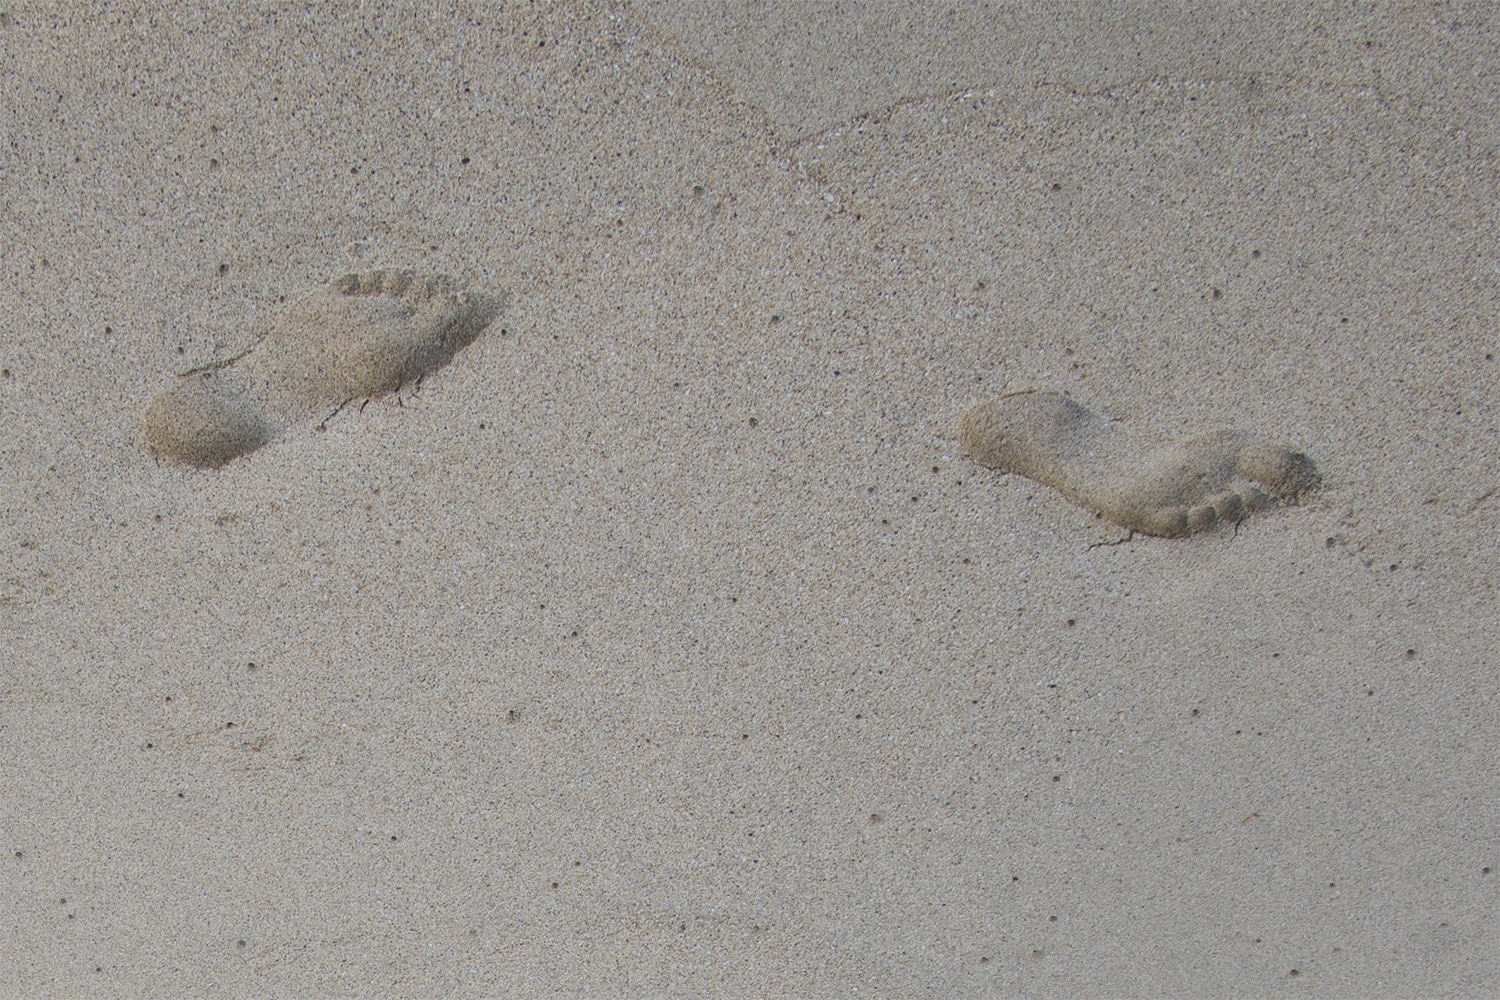 footprints2invert.jpg